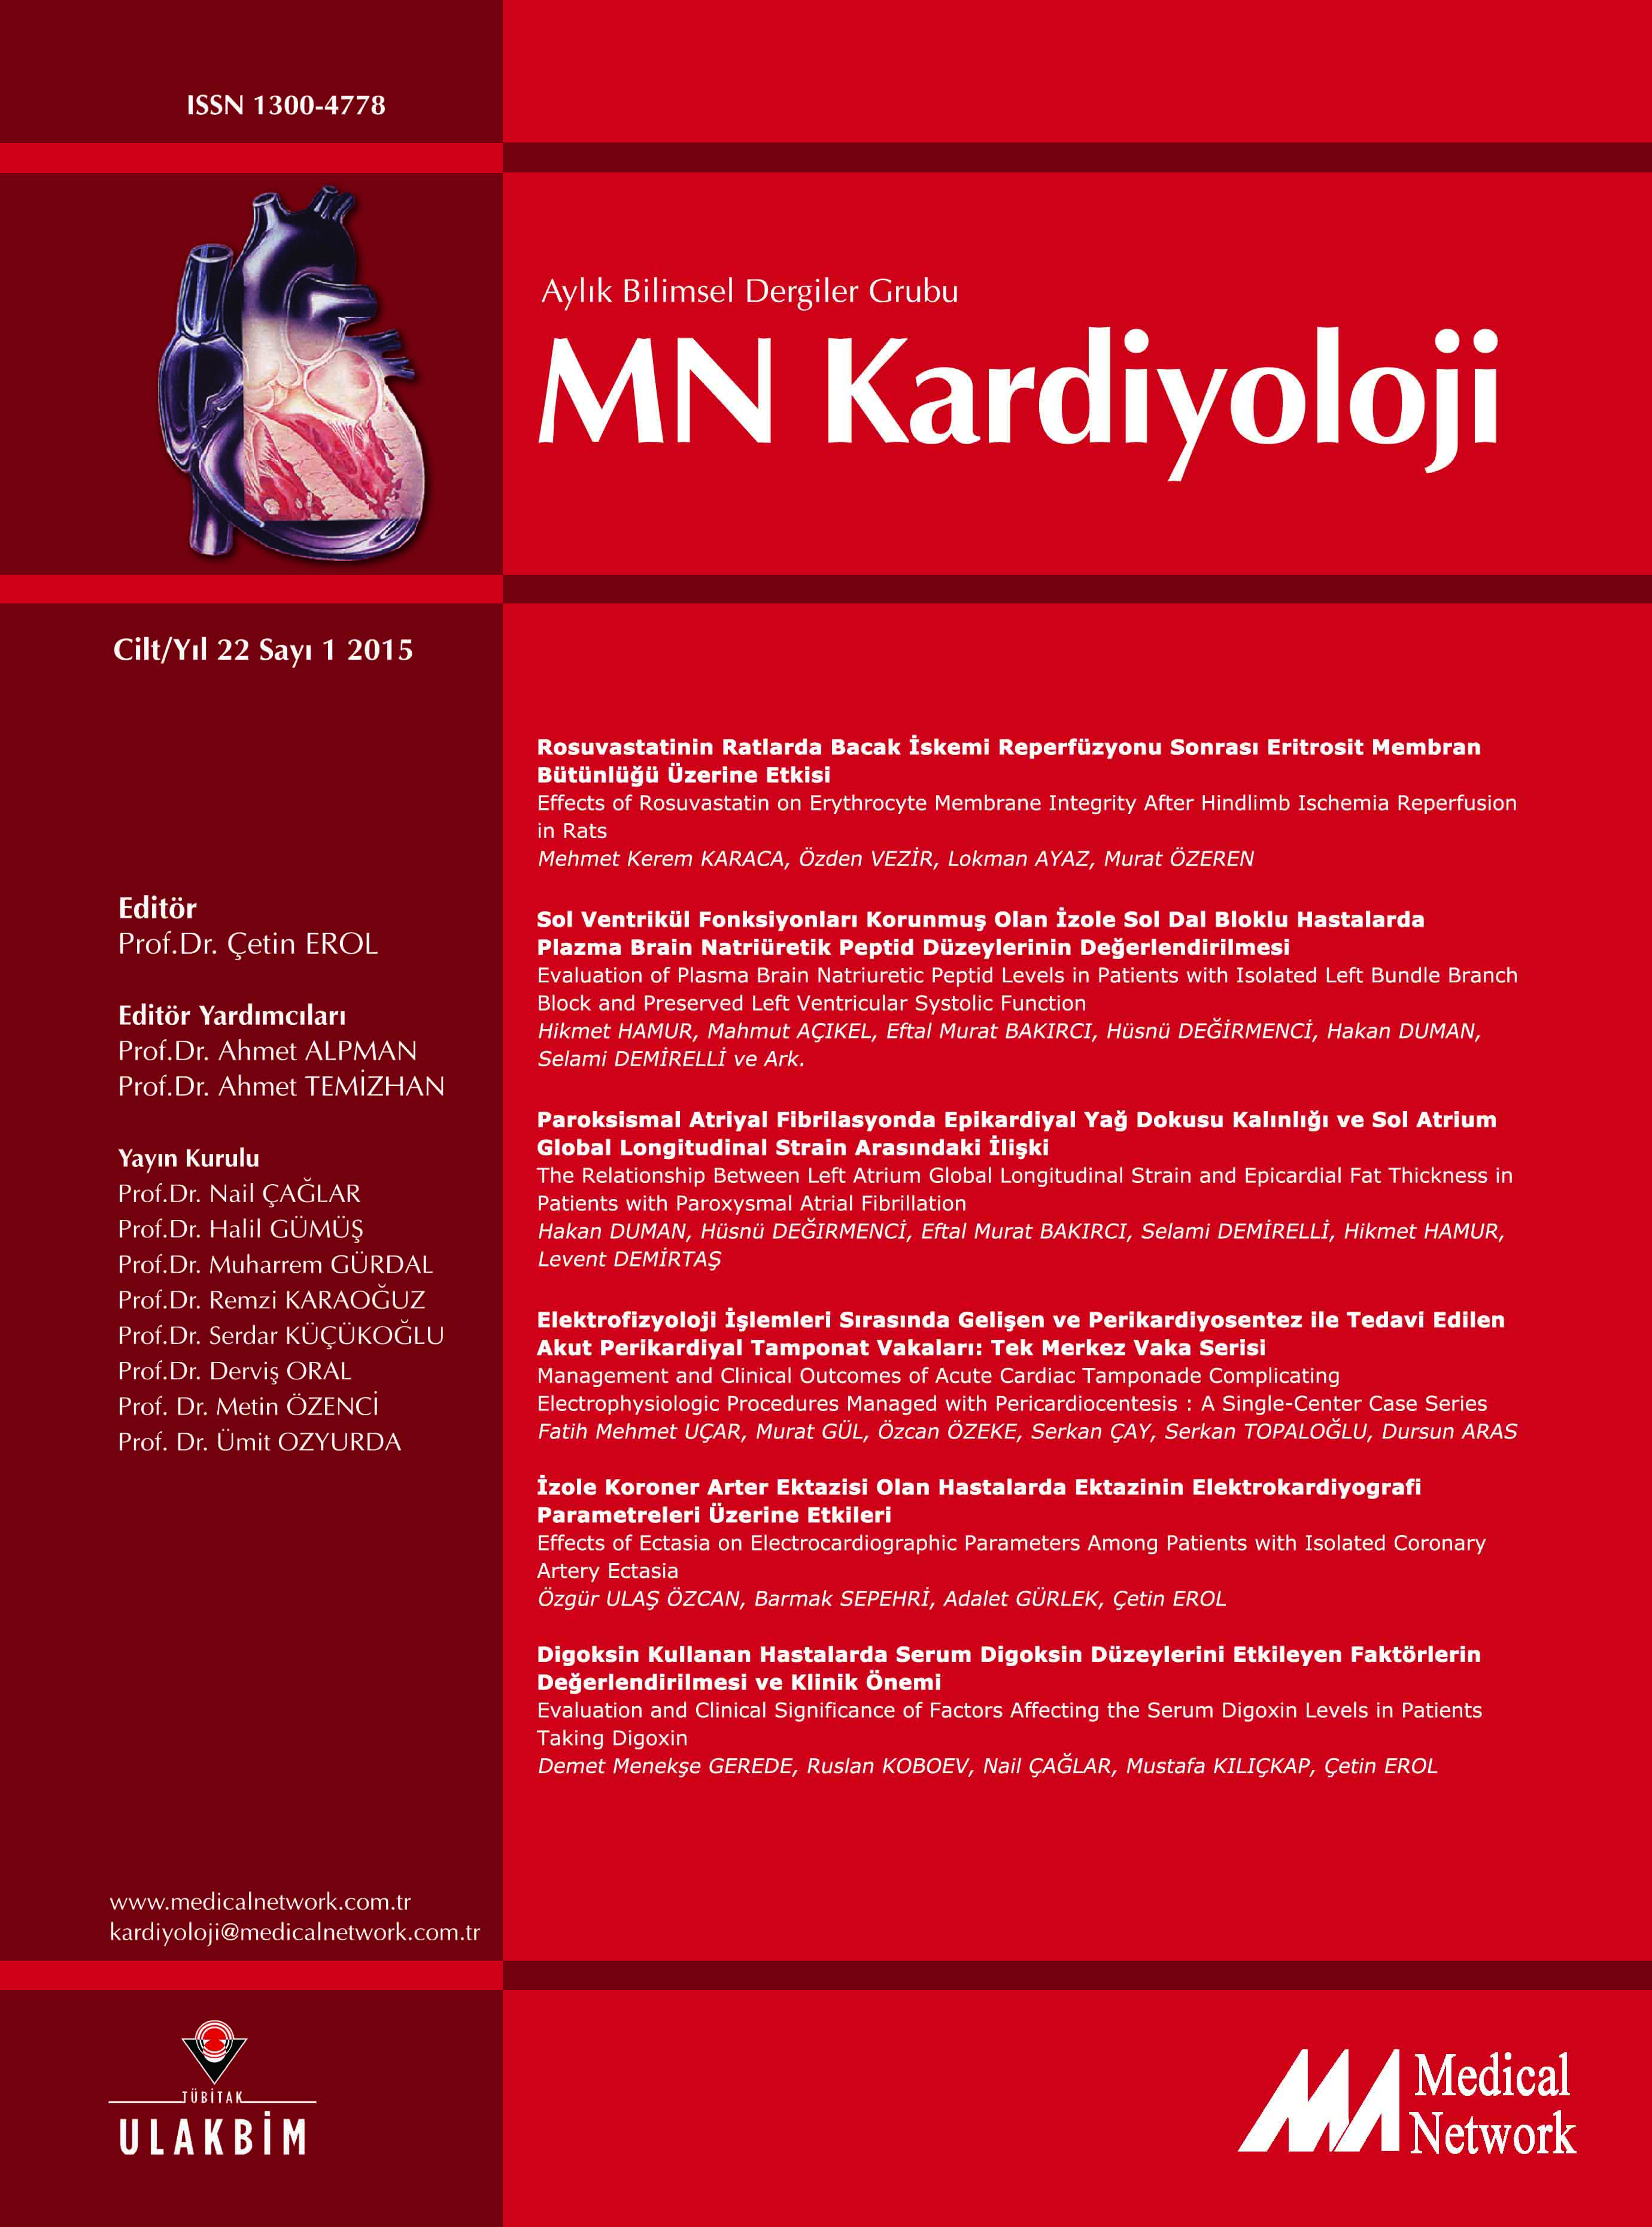 <p>MN Kardiyoloji Cilt: 22 Sayı: 1 2015 (MN Cardiology Volume: 22 No: 1 2015)</p>